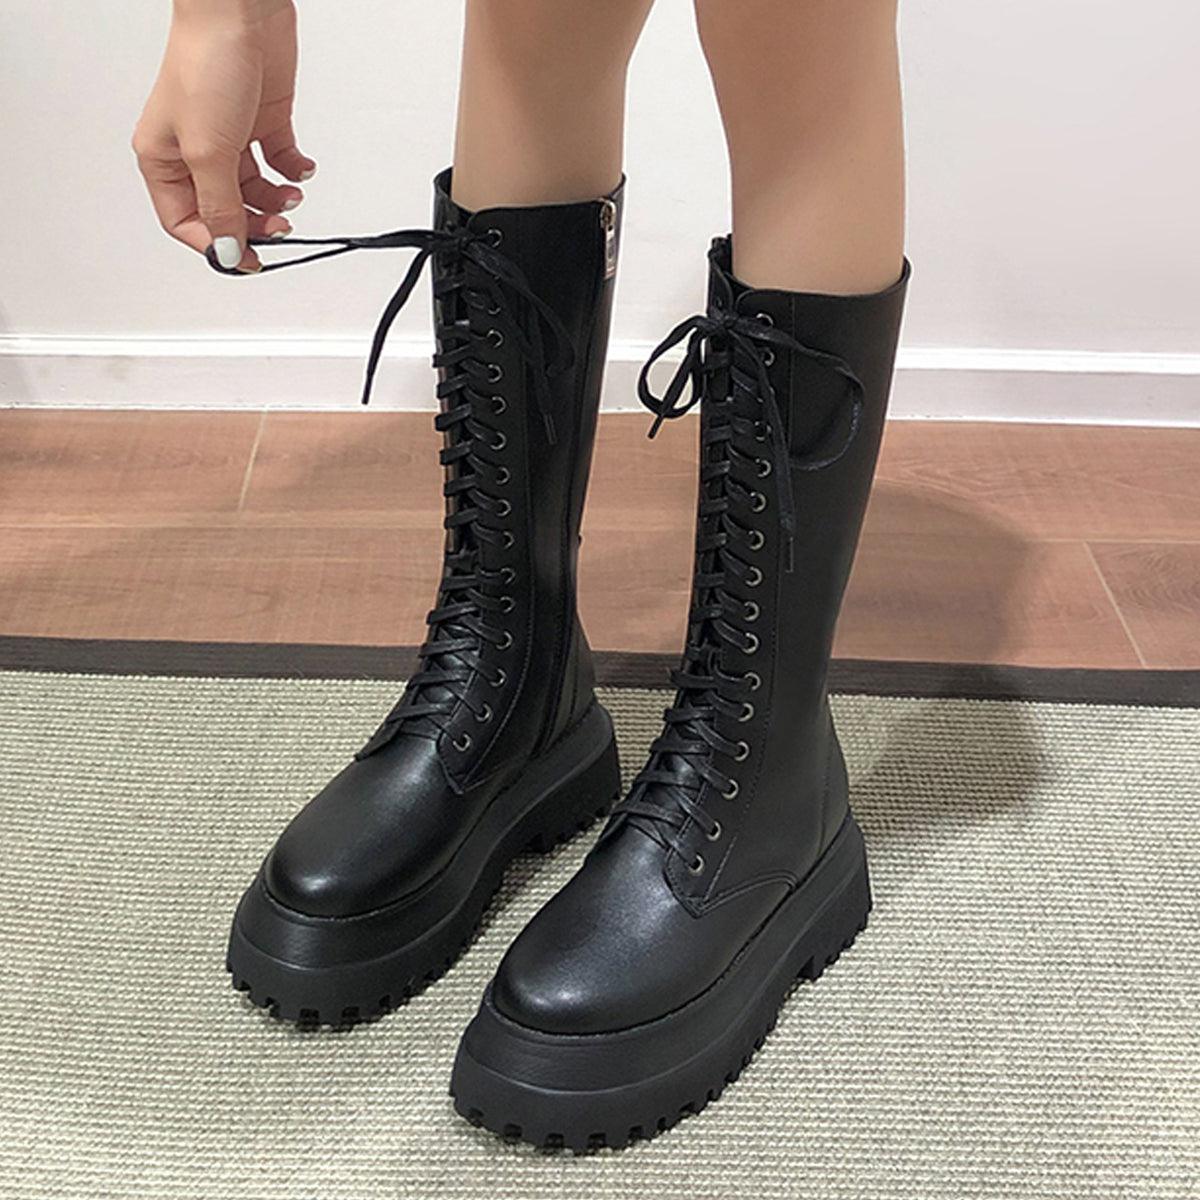 Black Alt Girl High Combat Boots - Aesthetic Clothes Shop